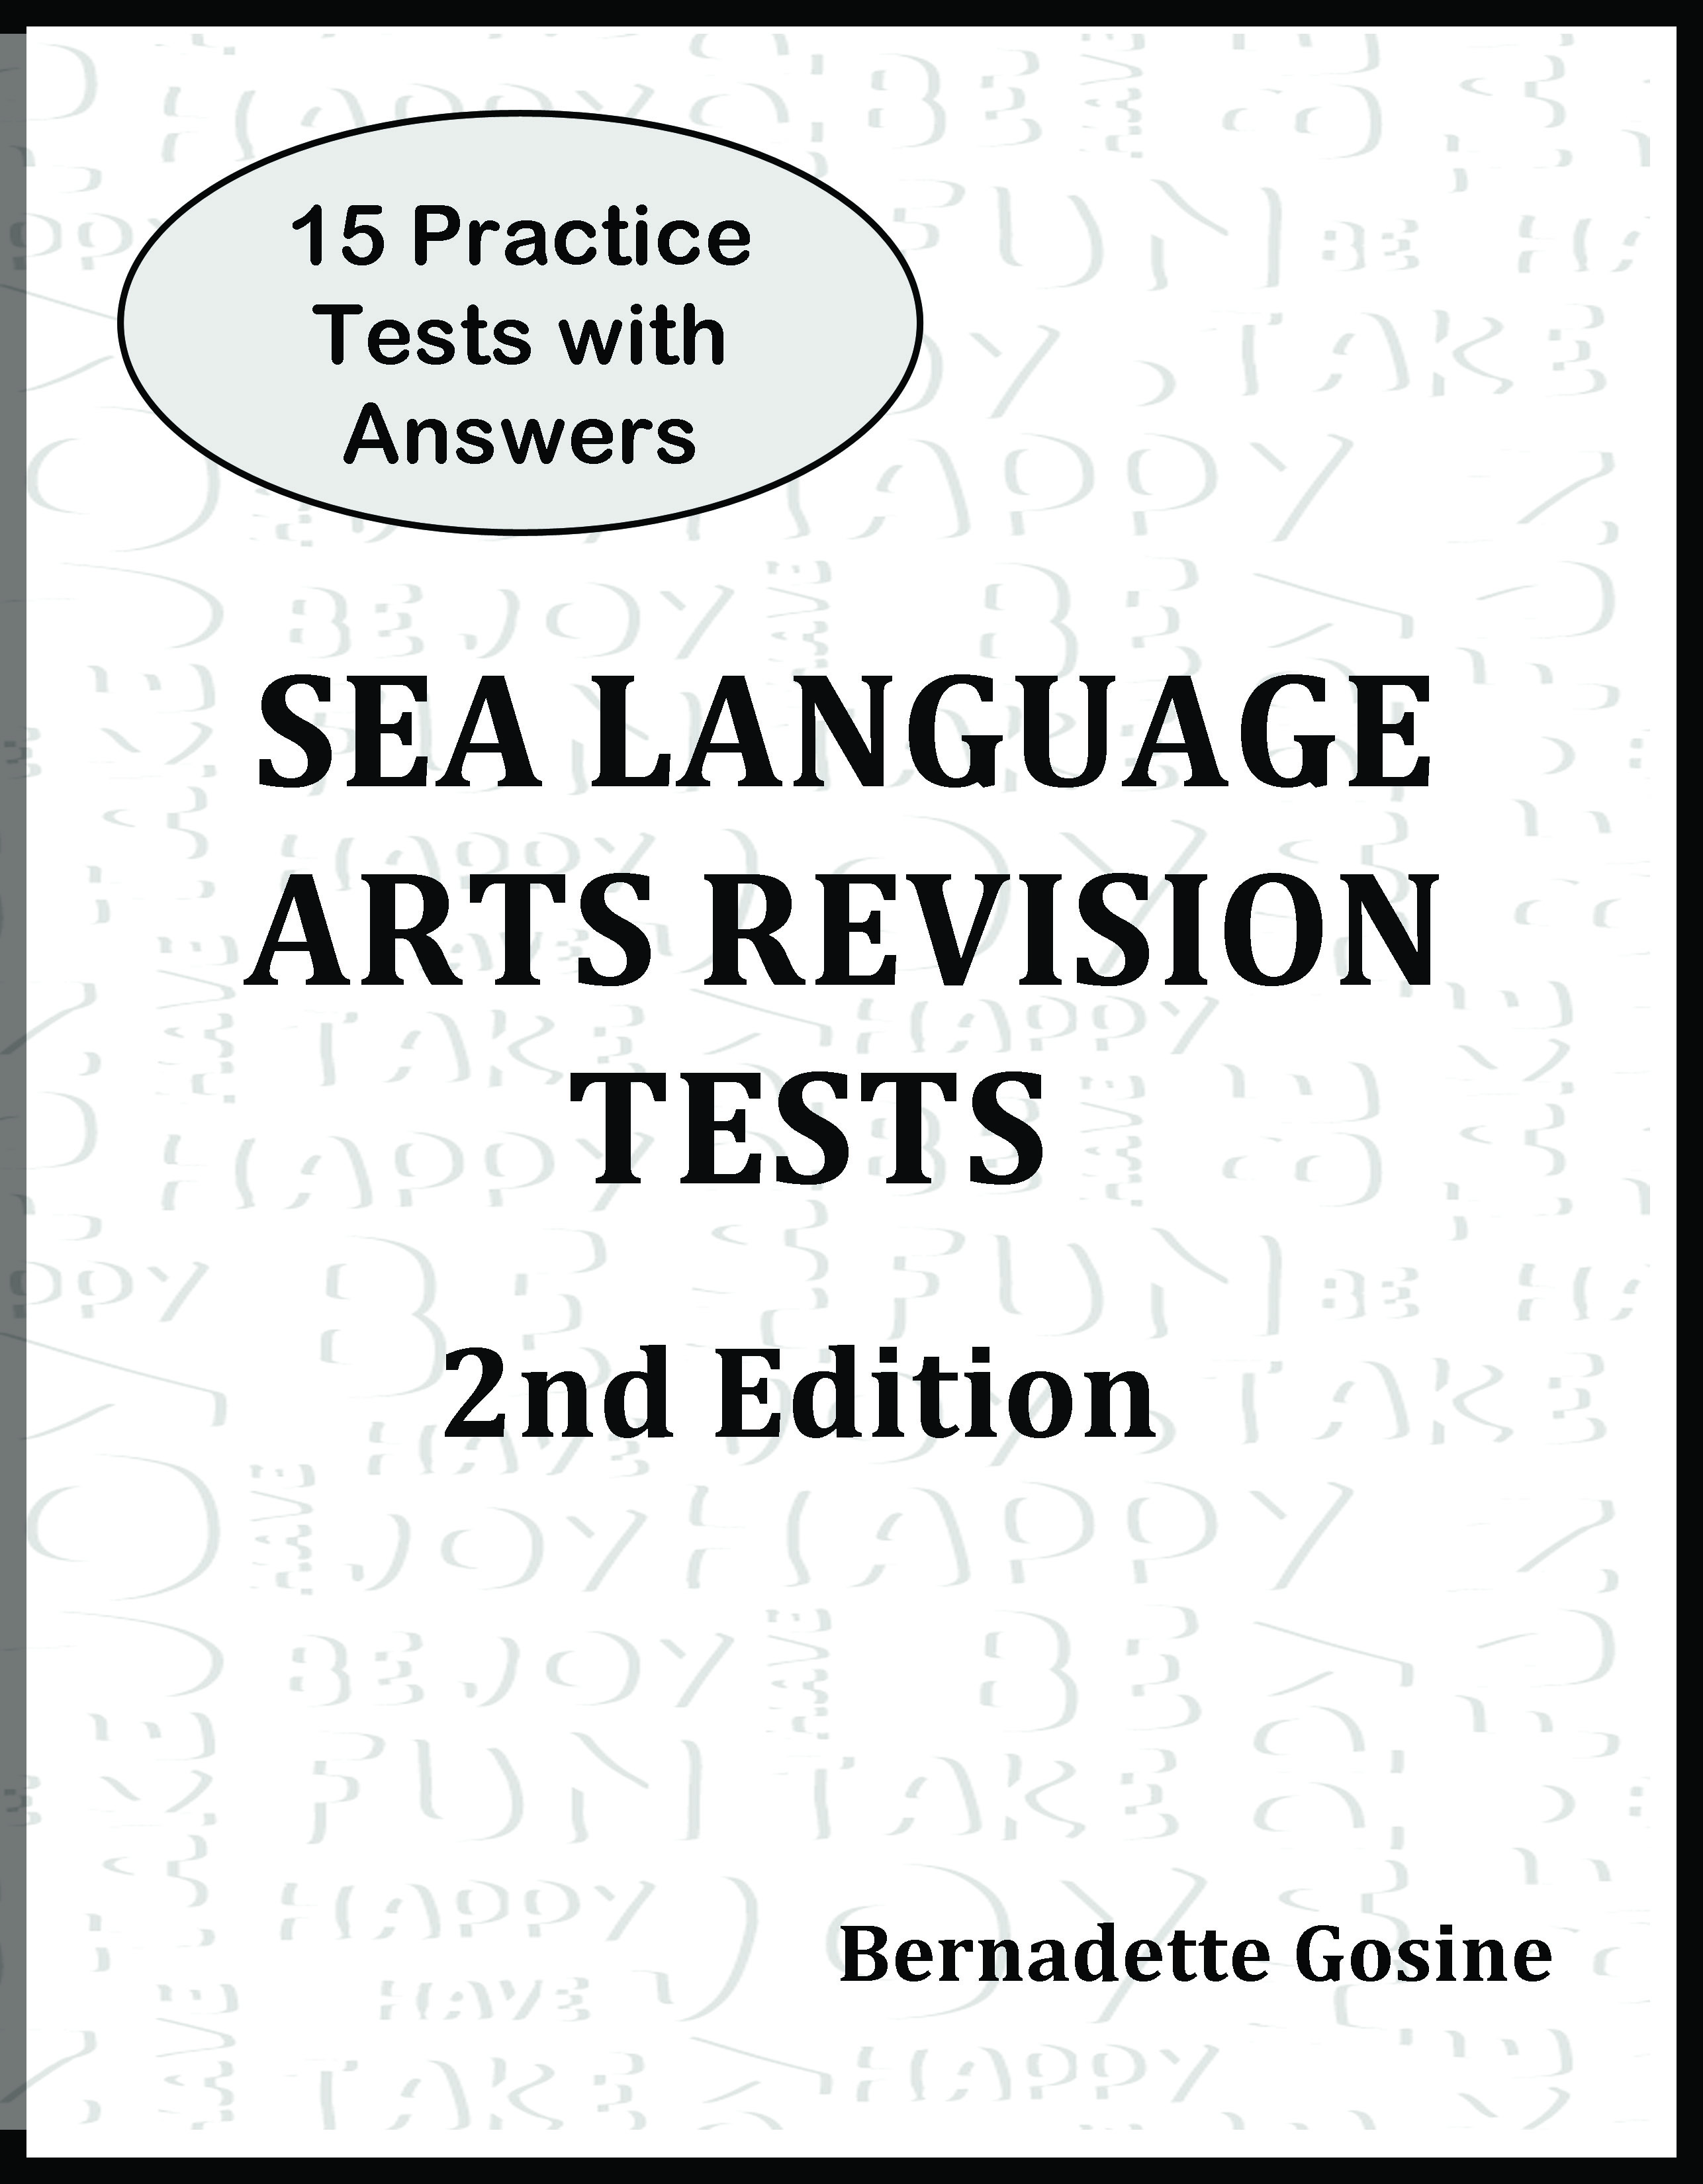 SEA Language Arts Revision Tests